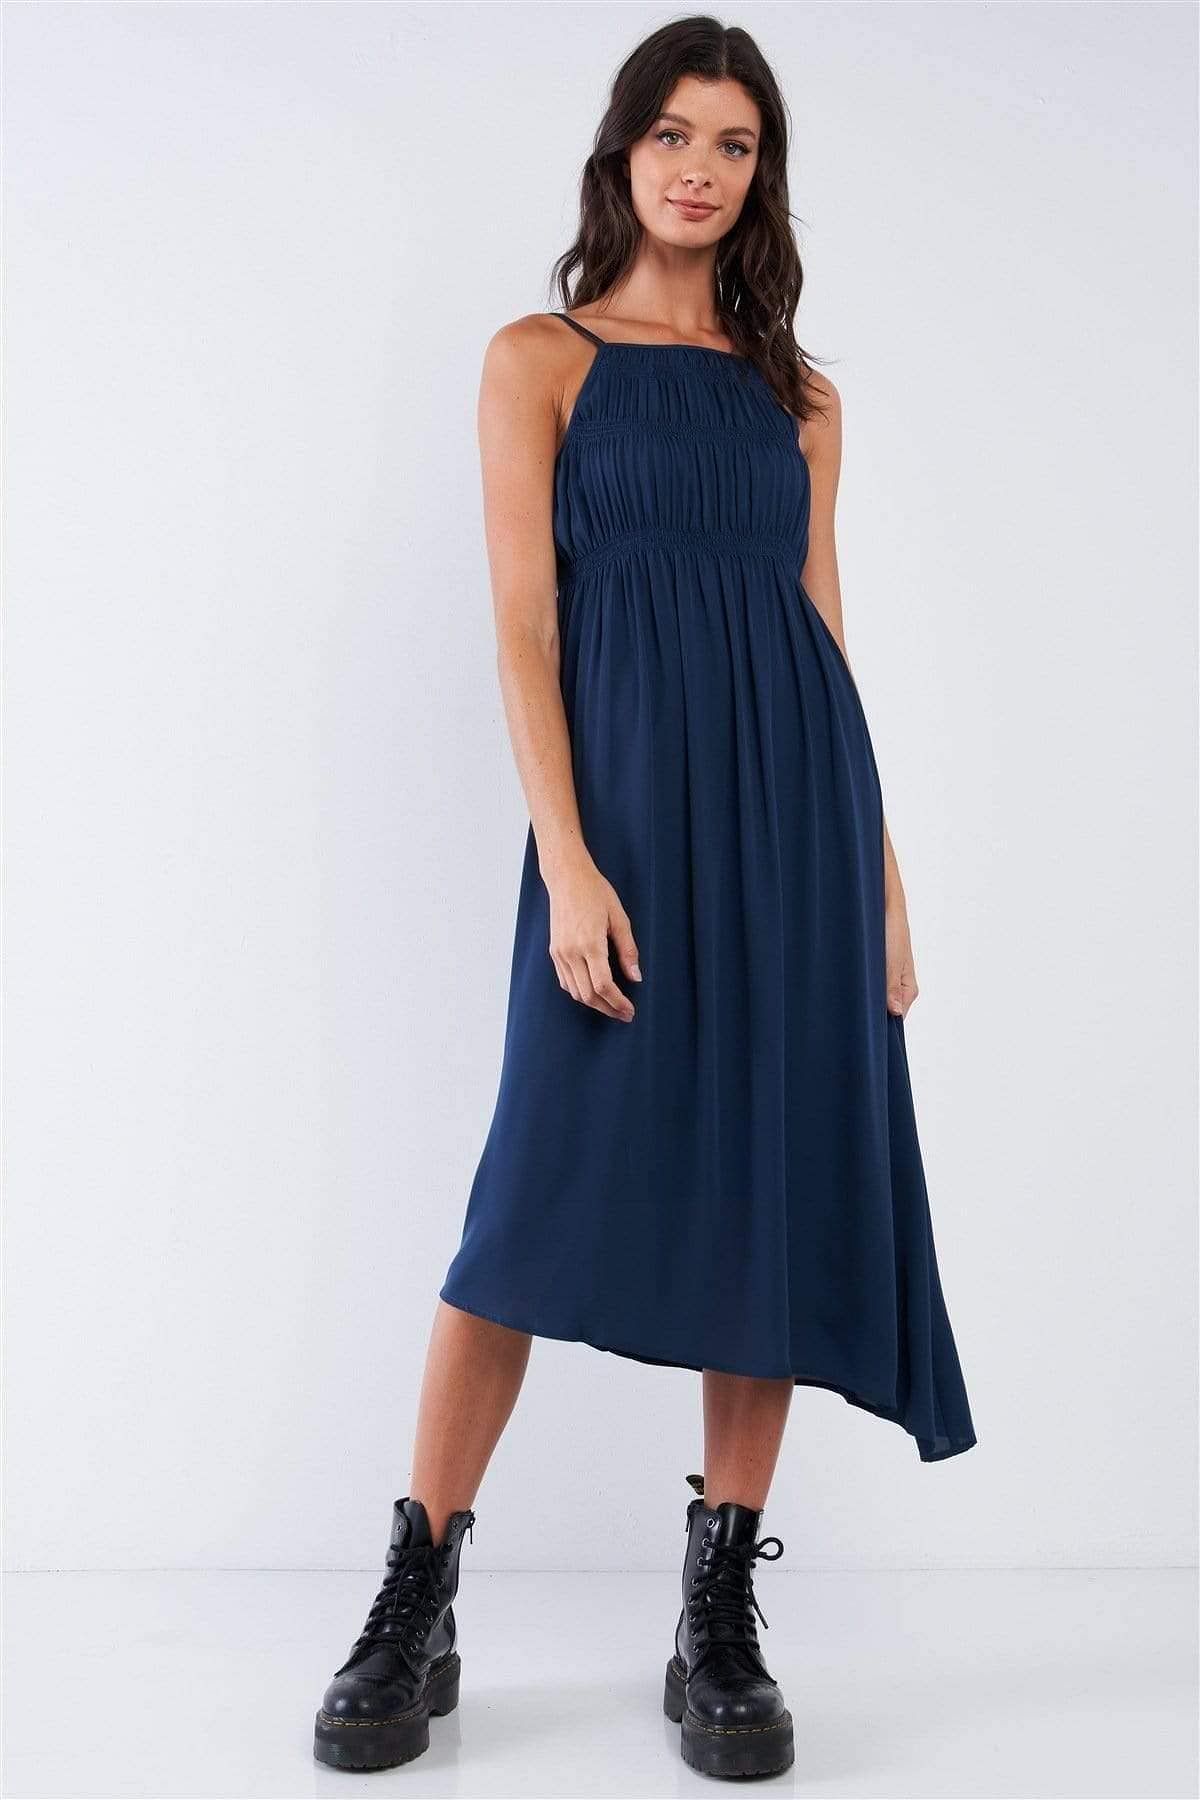 Navy Spaghetti Strap Asymmetric Ruched Maxi Dress - Shopping Therapy, LLC Dress